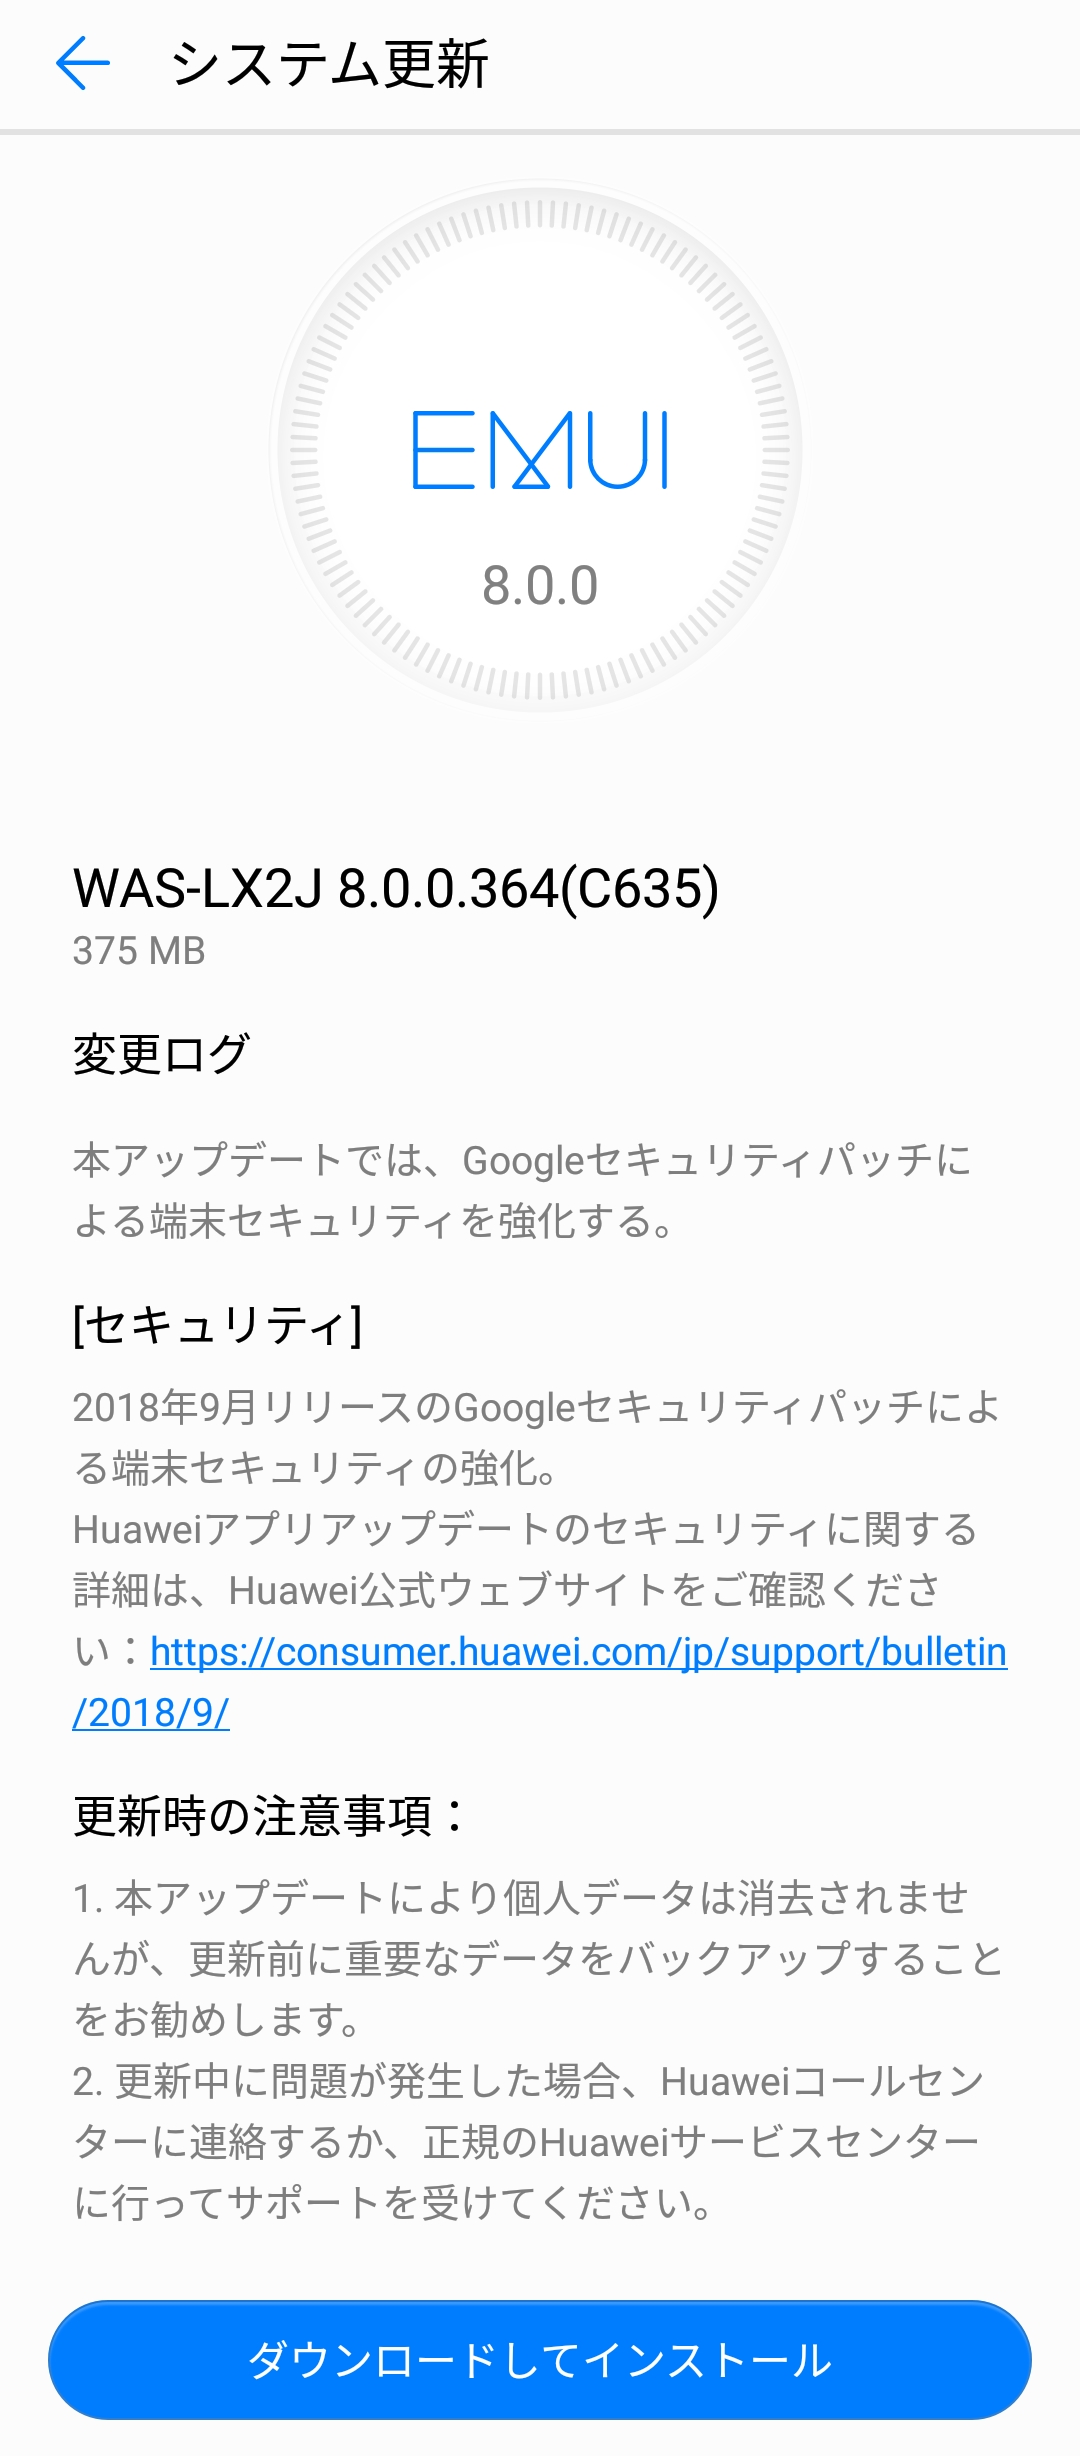 Huawei P10 Lite アップデート情報 カスタム研究所